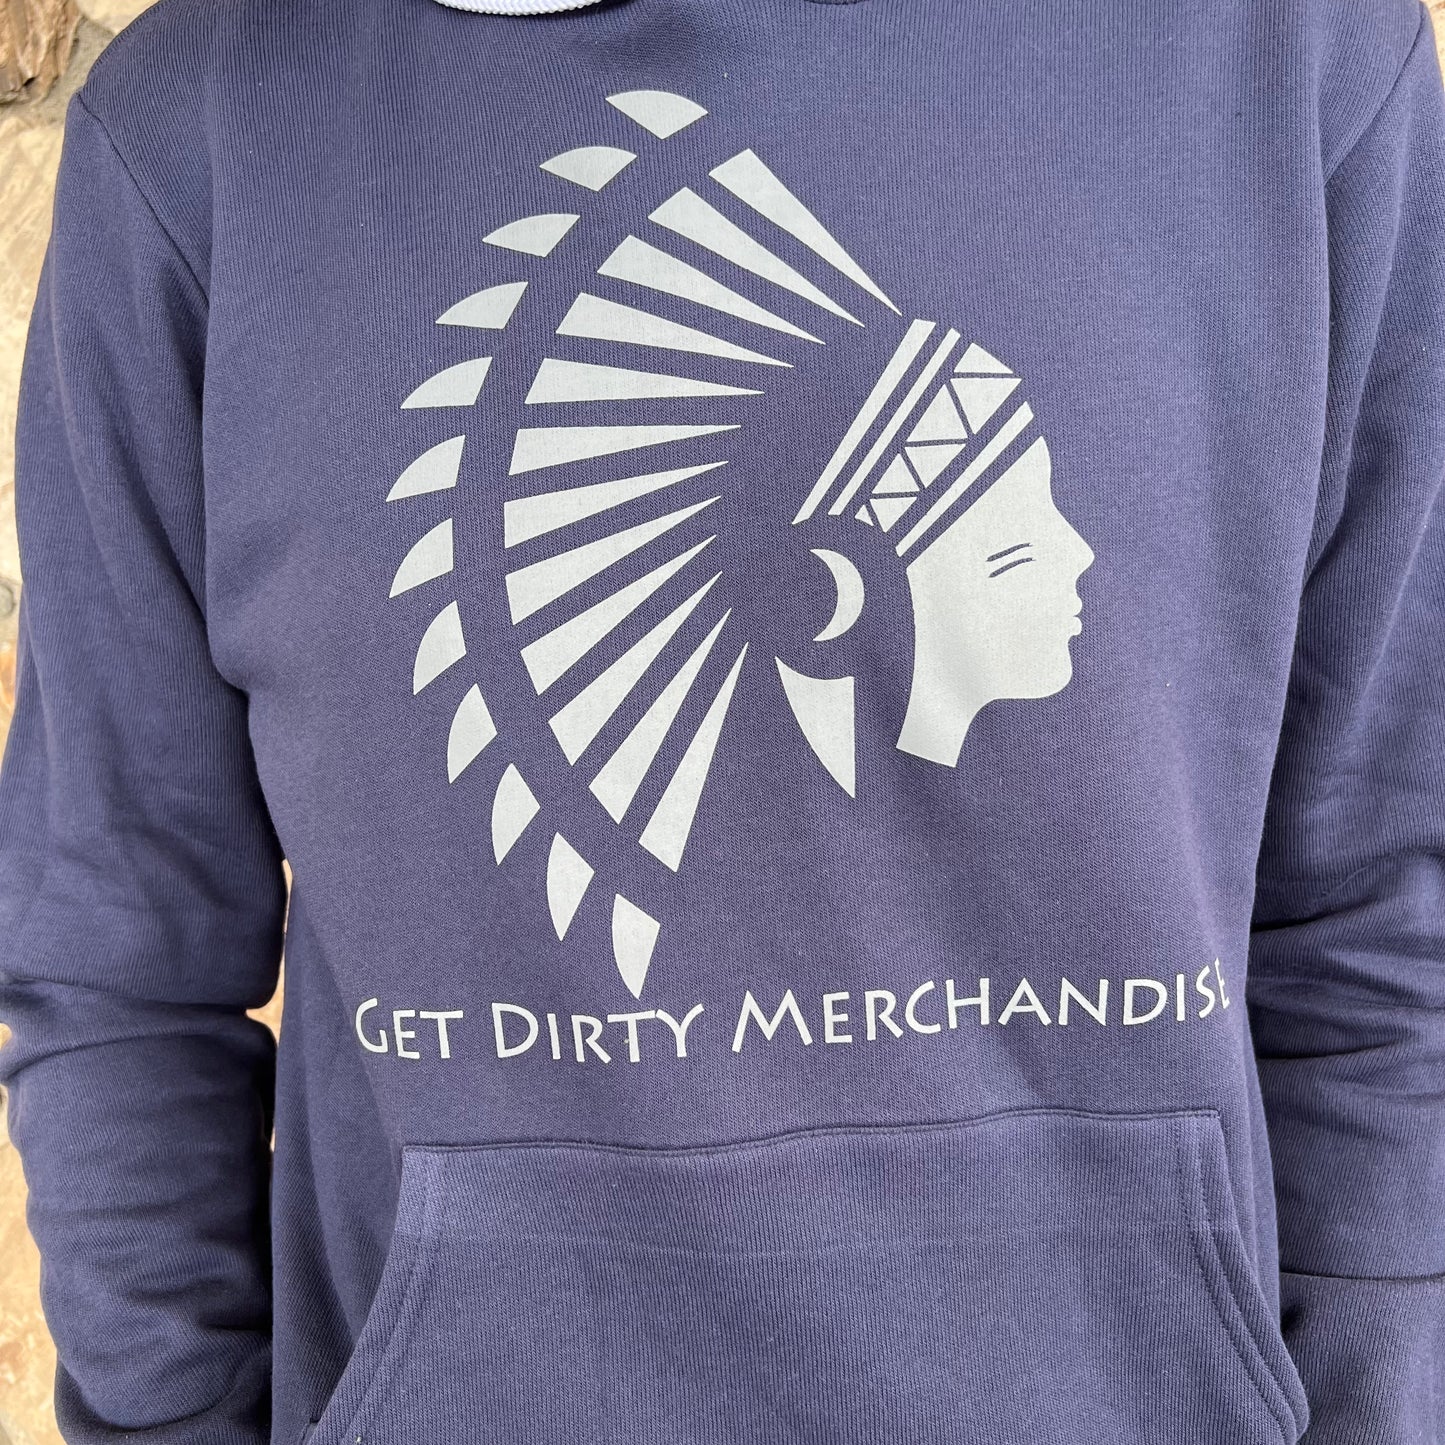 Get Dirty Merchandise Lucy sudadera con capucha azul marino/plateada